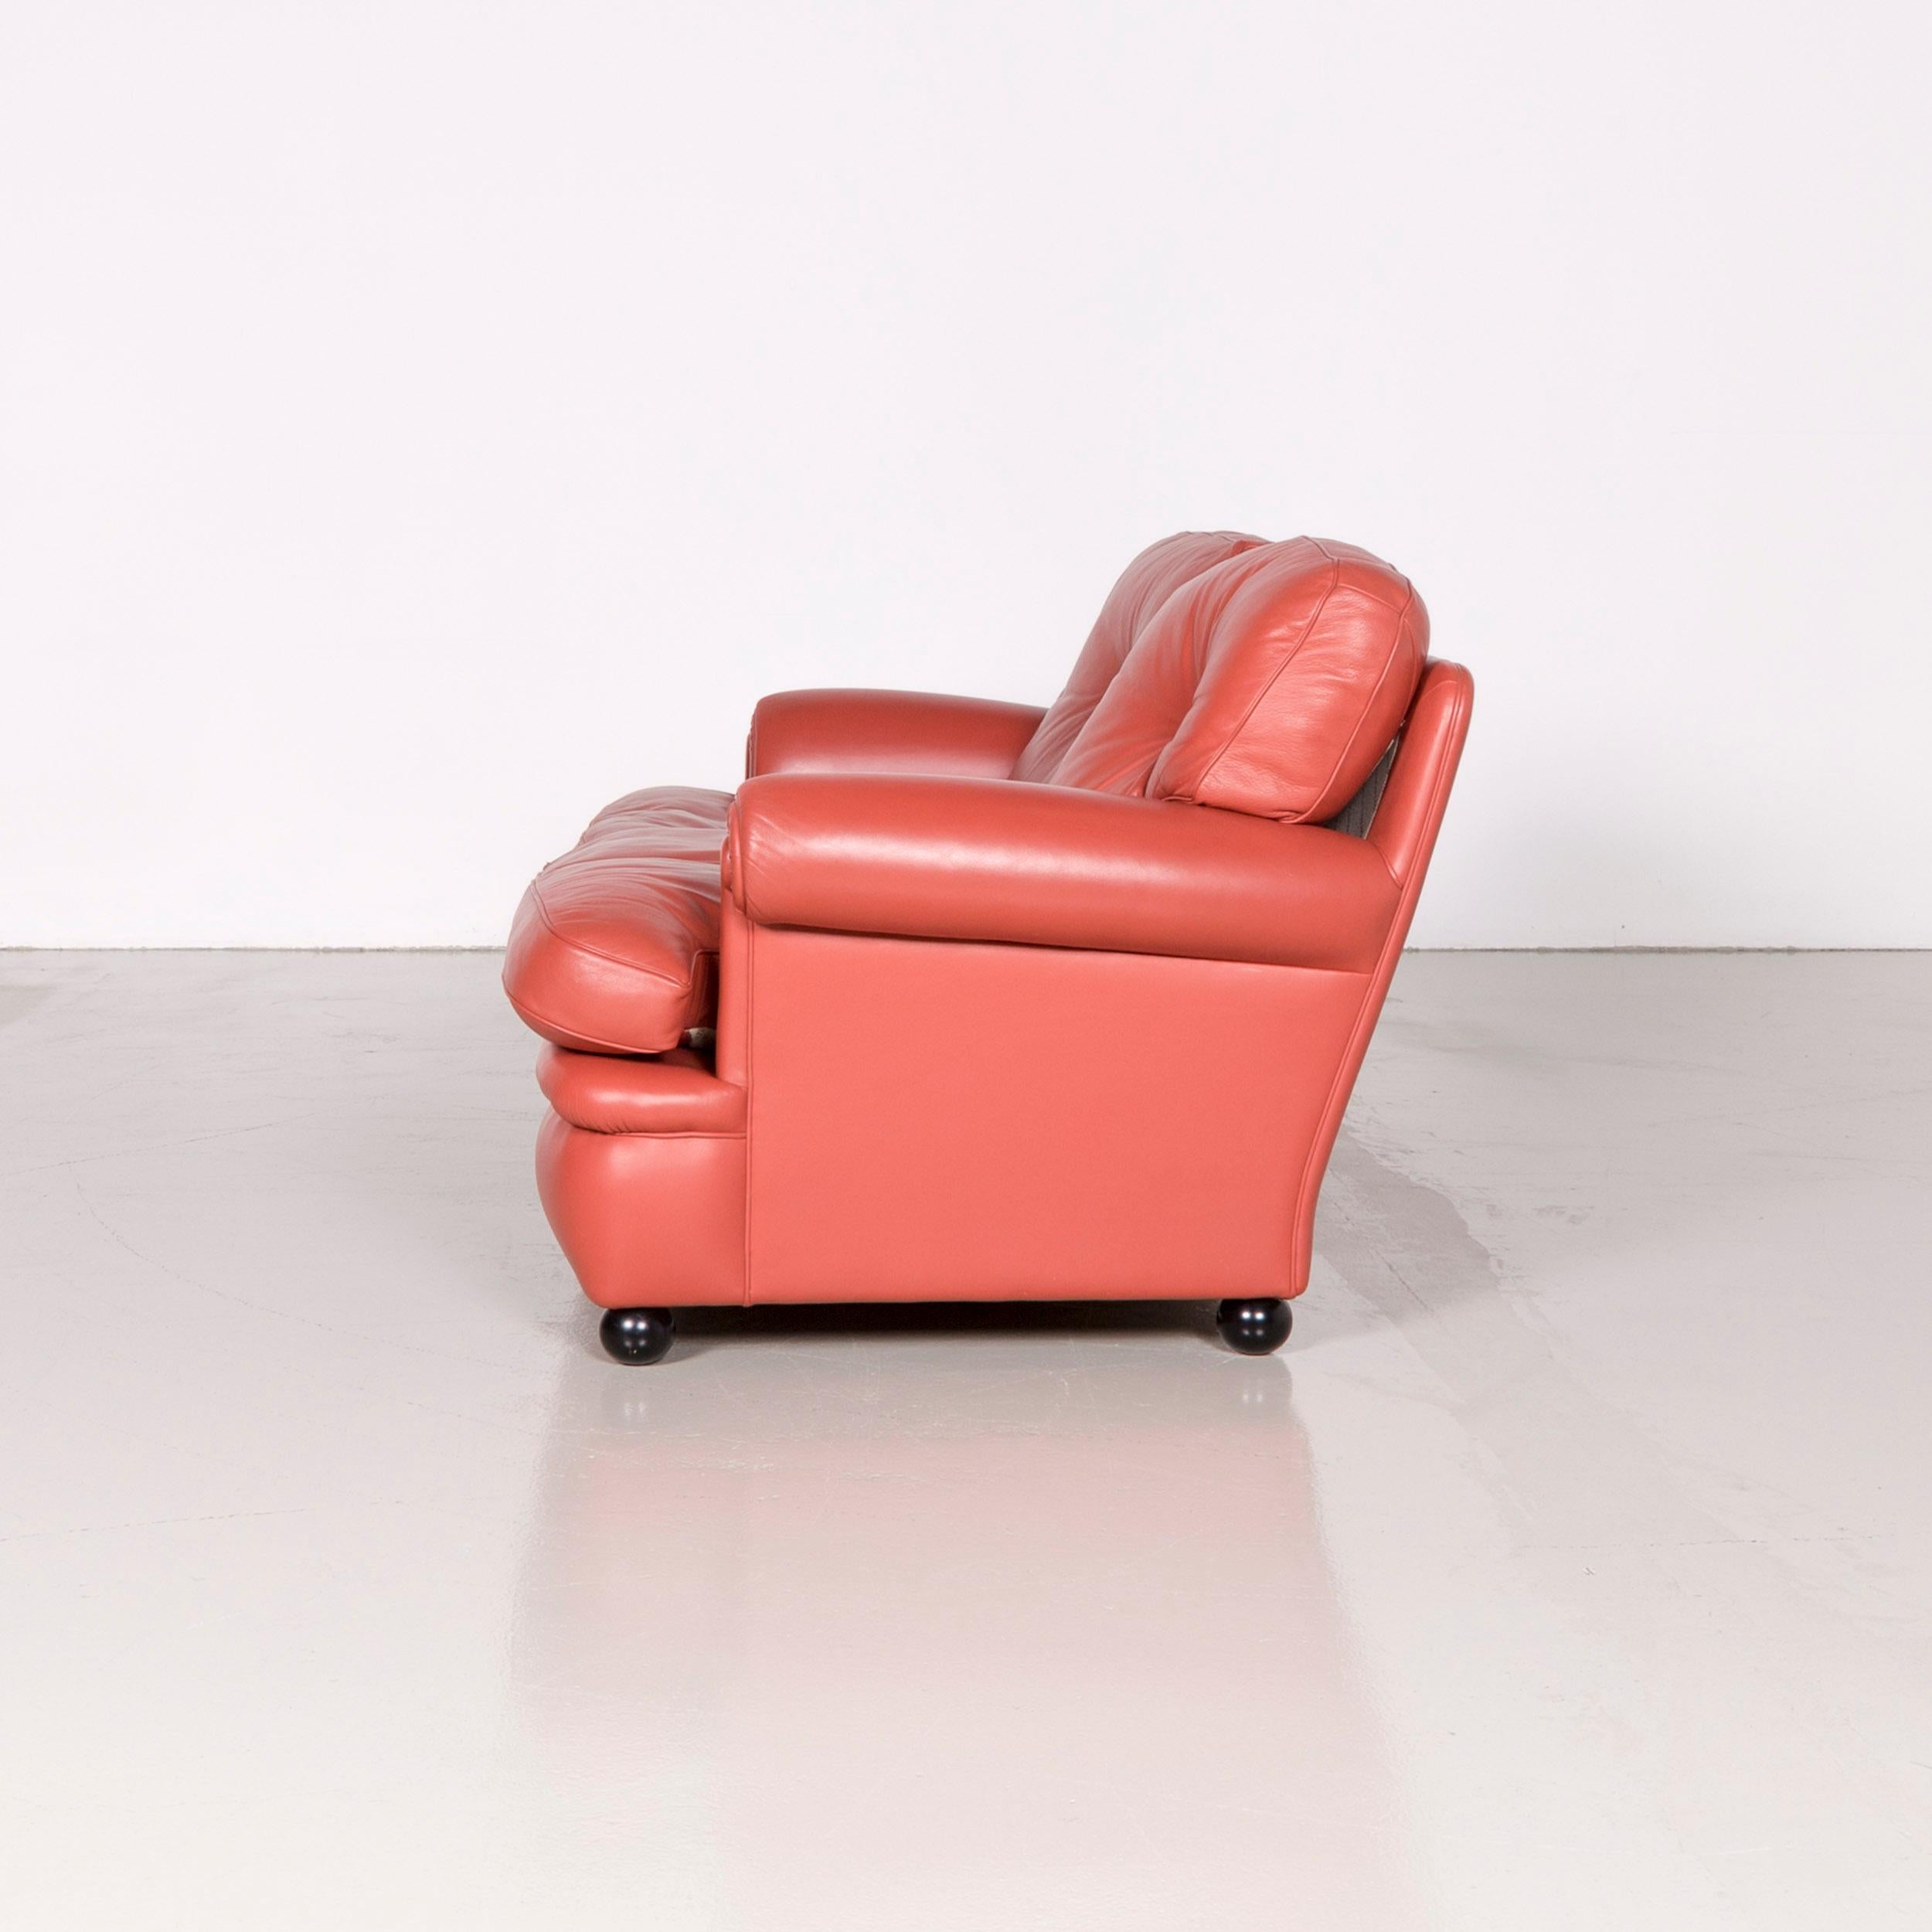 Poltrona Frau Dream on Designer Leather Two-Seat Couch Orange 7